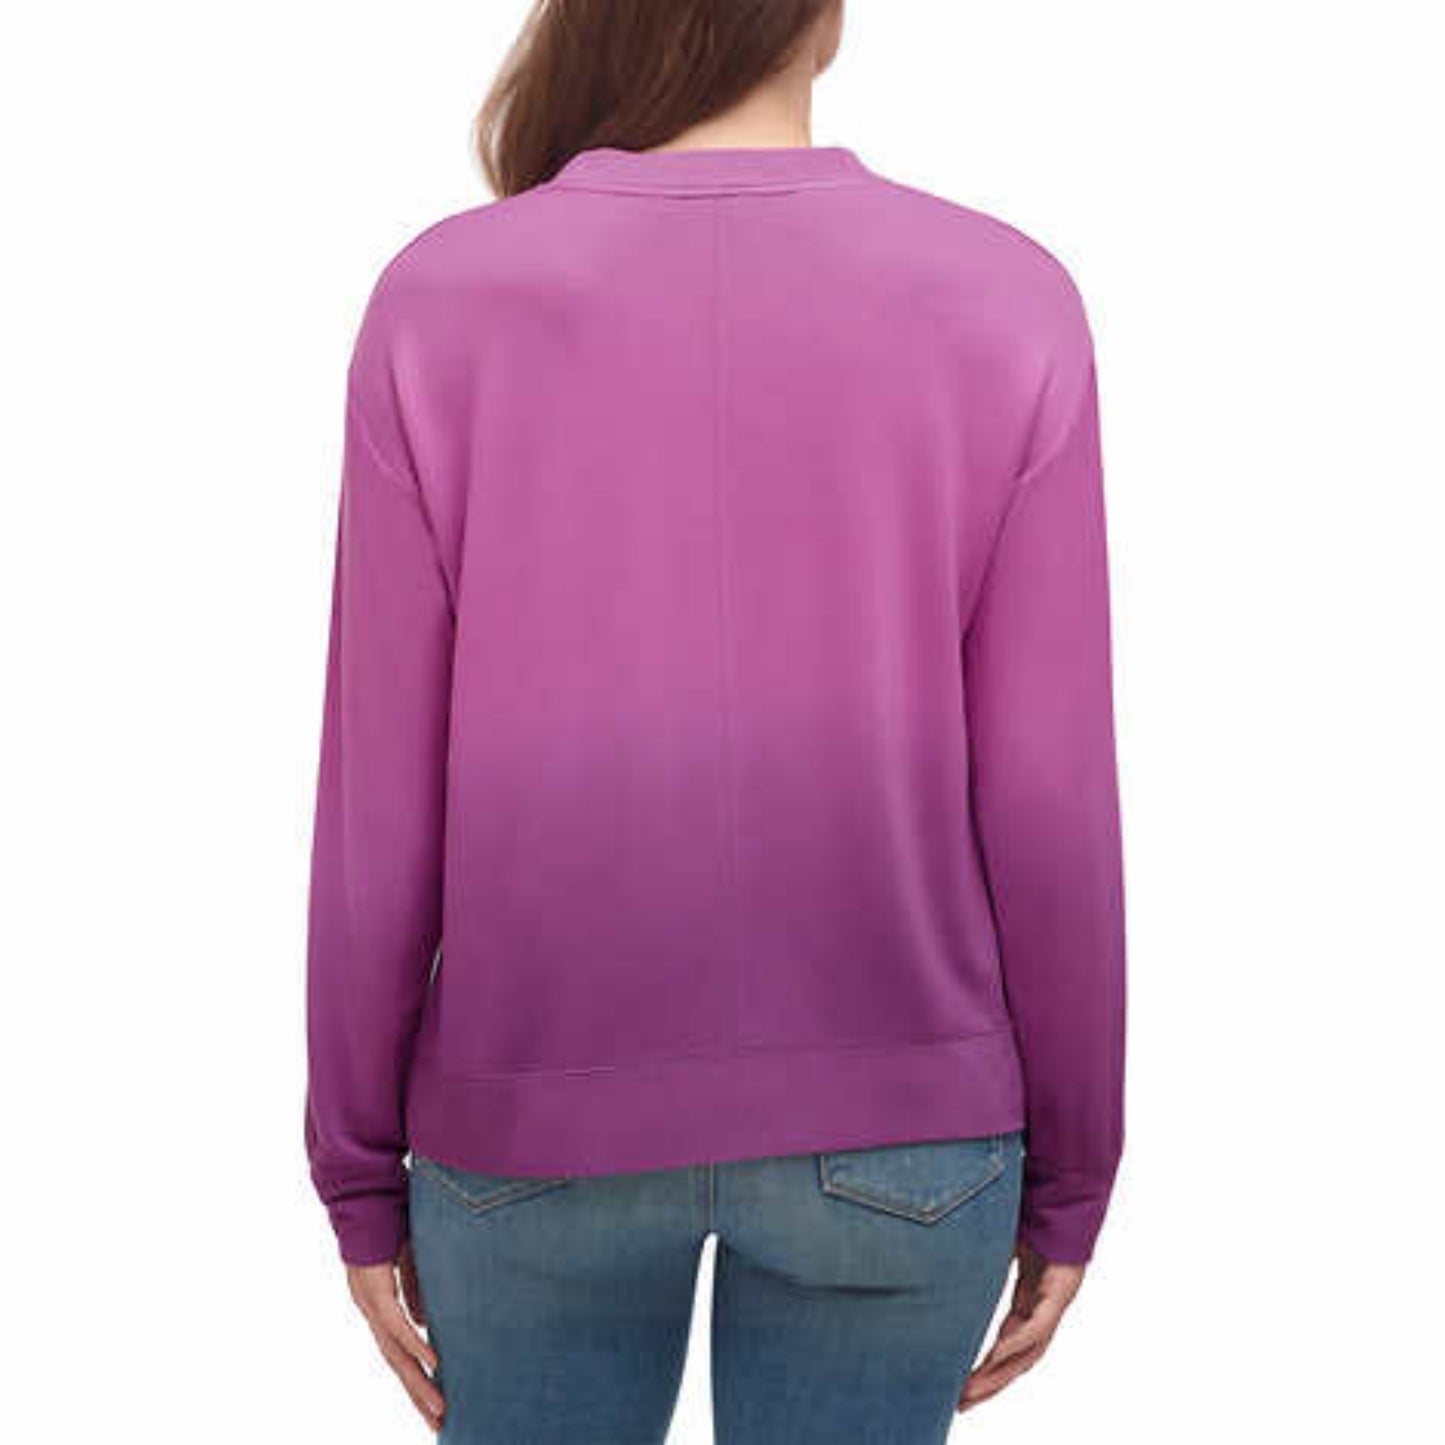 Splendid Super Soft Ombre Dip Dye Sweatshirt Pullover Shirt Top